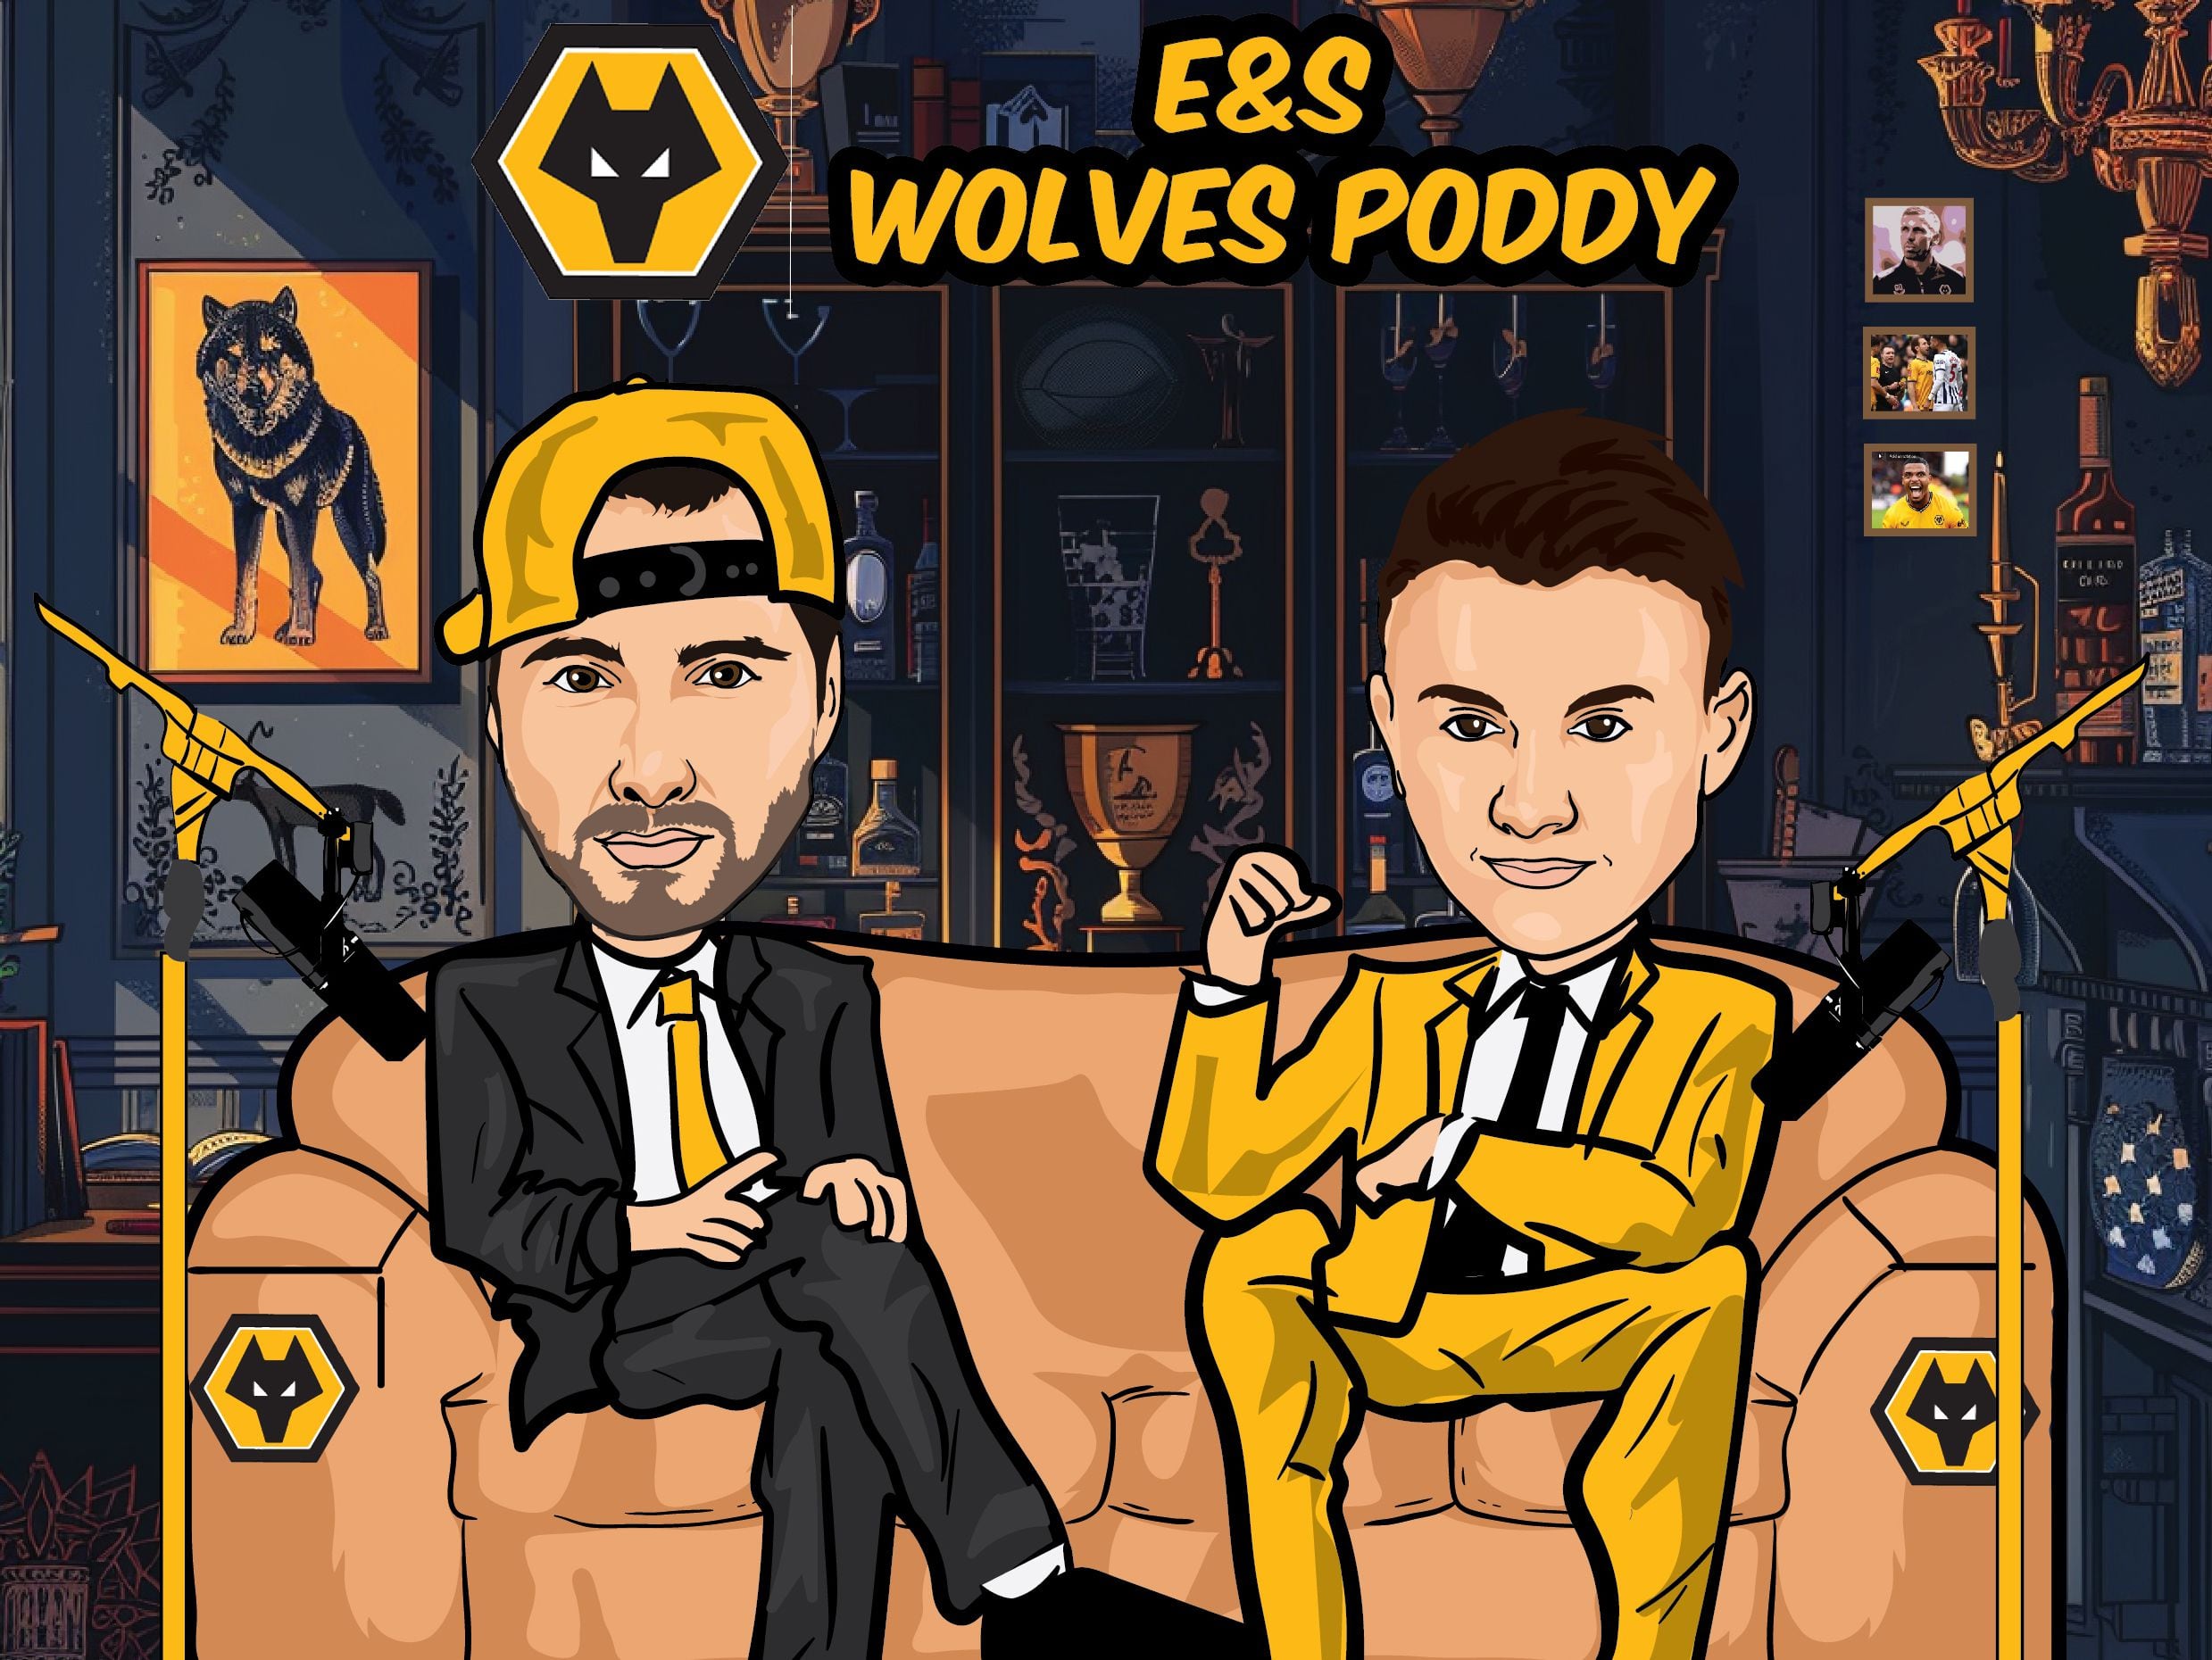 E&S Wolves podcast: Episode 342 - Hola! We're bacccck!